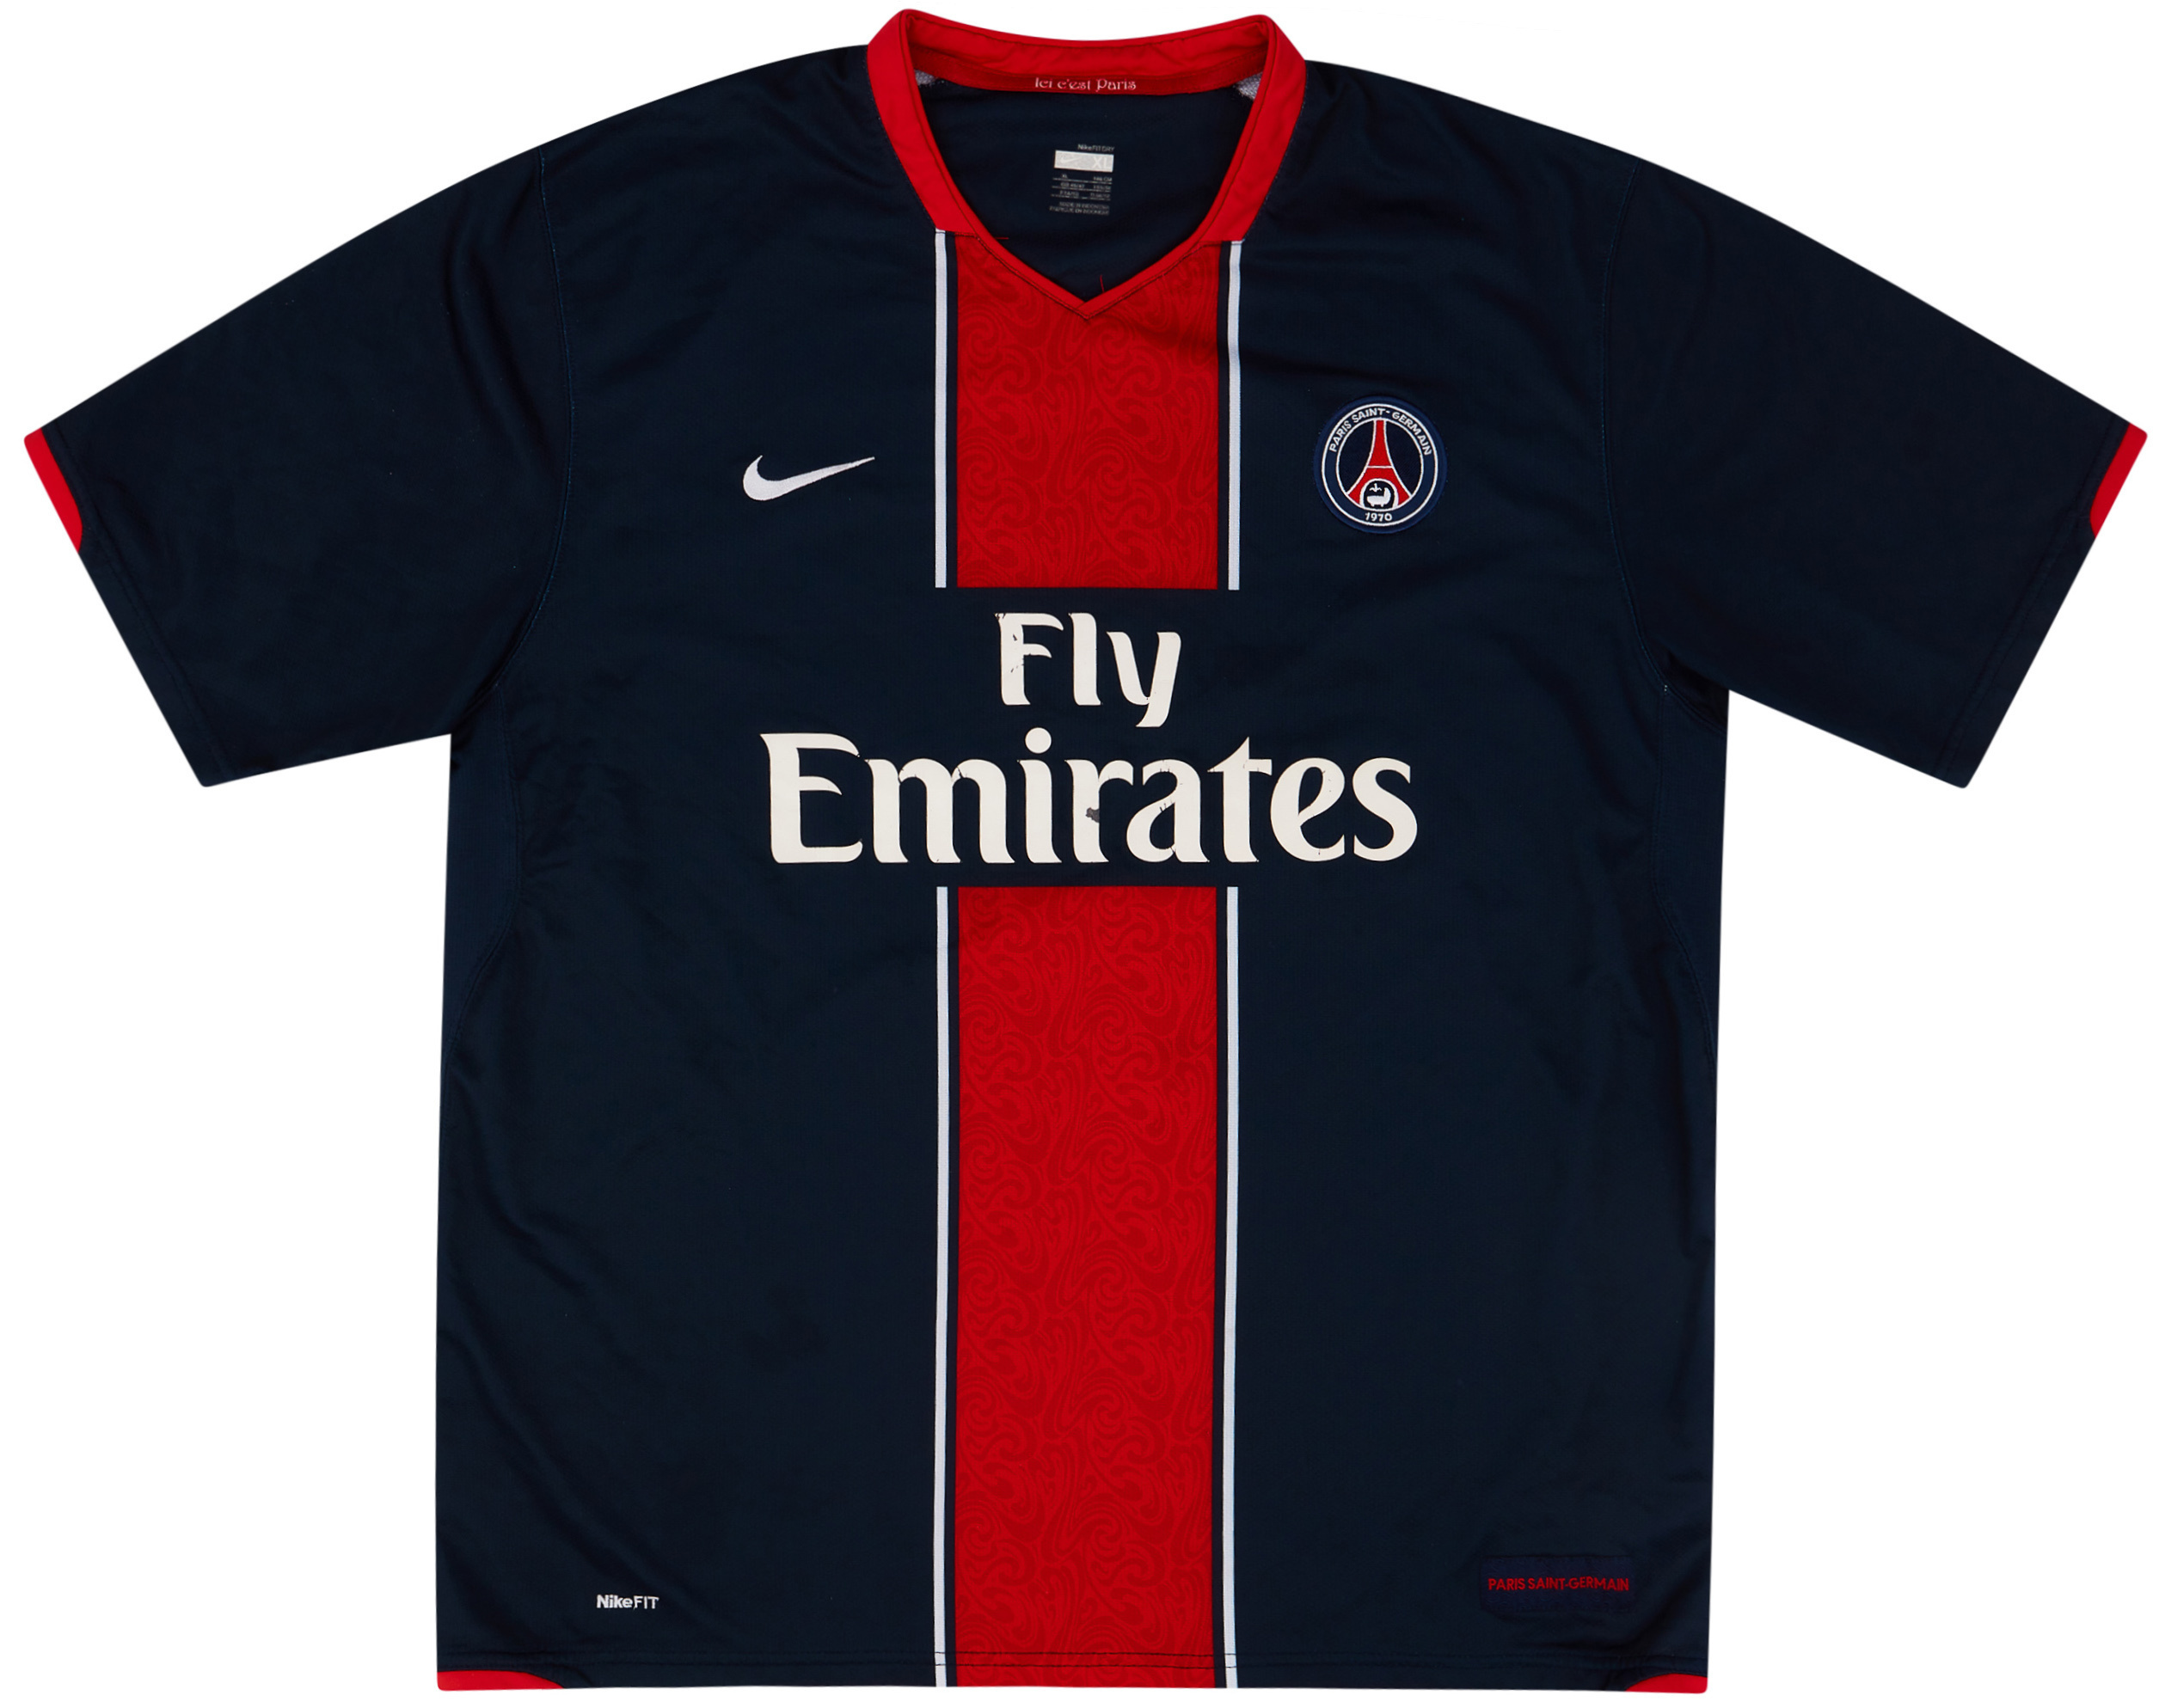 Paris Saint Germain 2007/2008 Nike football kits maillot - Football Shirt  Culture - Latest Football Kit News and More